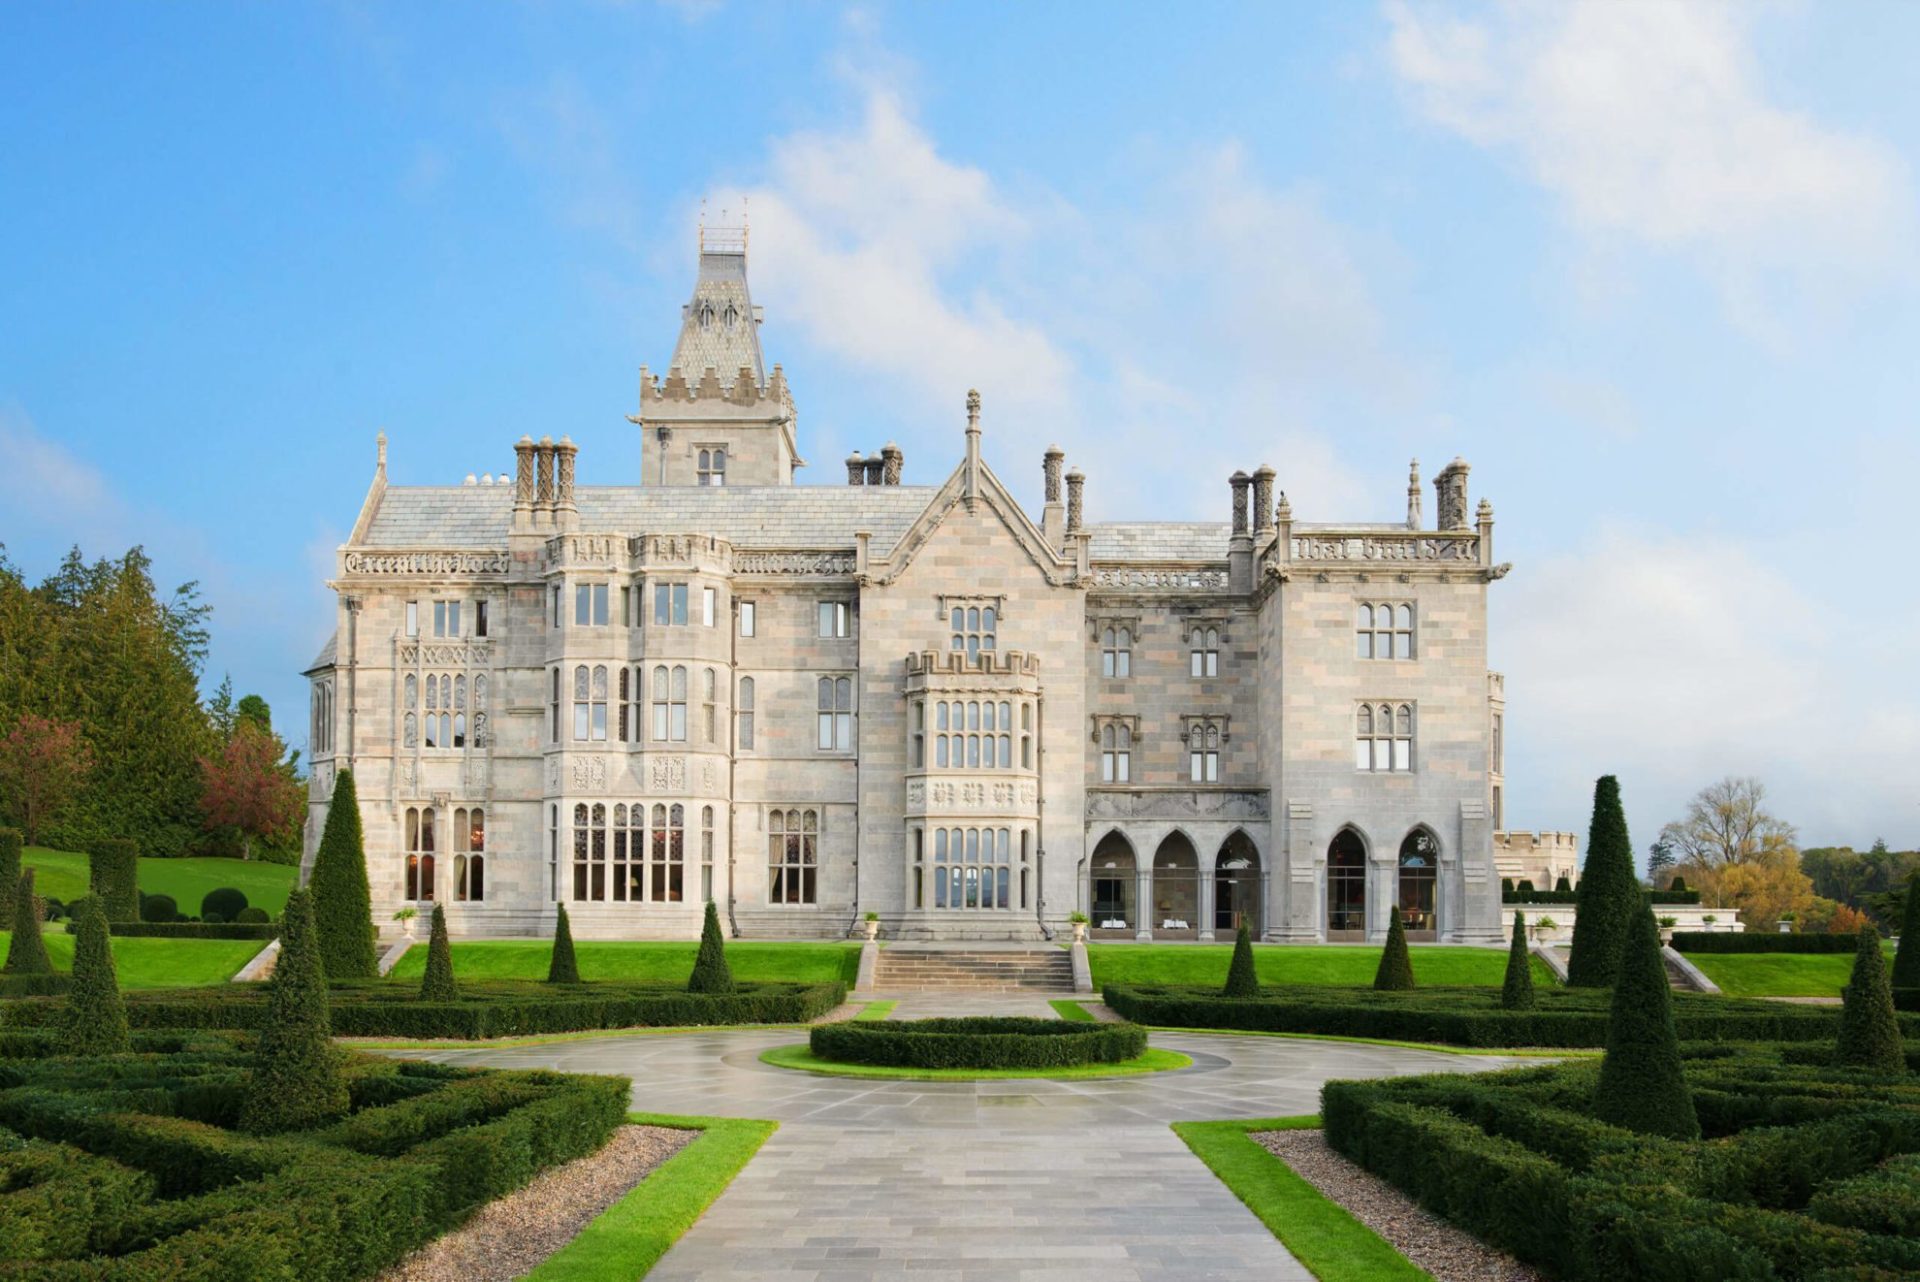 Adare Manor Ireland's most anticipated luxury hotel project